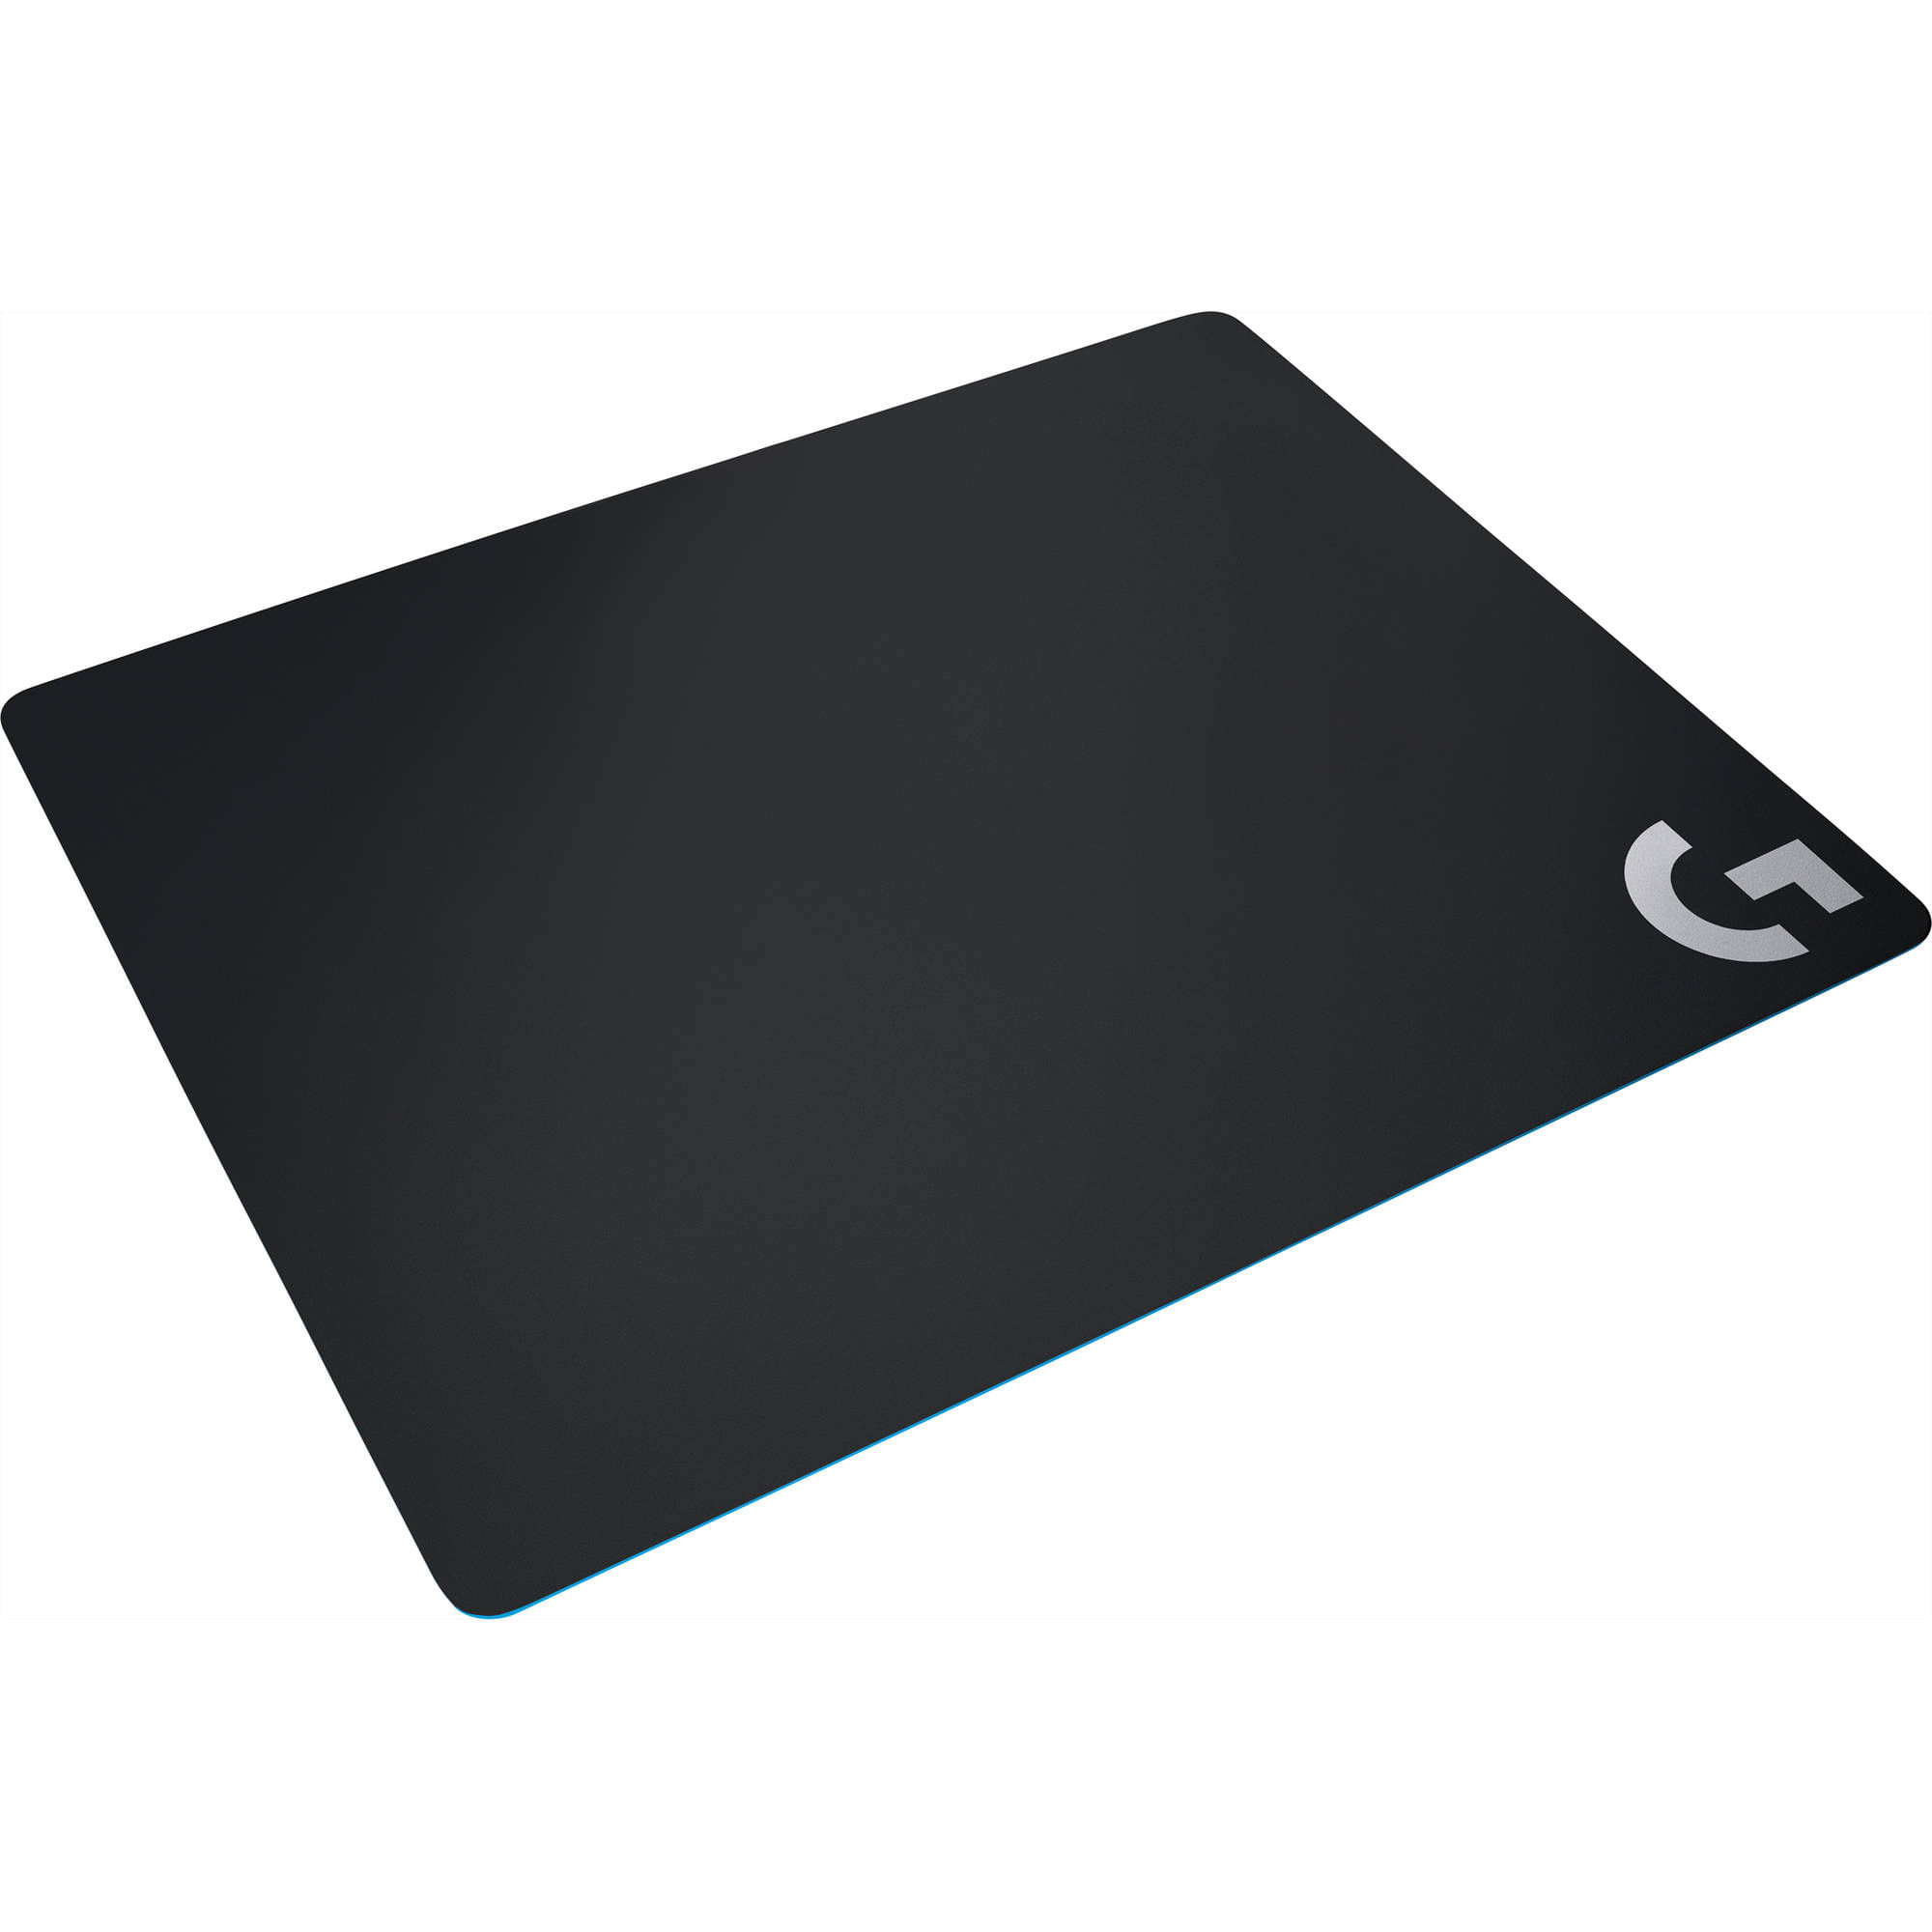 Mouse Pad Logitech G G440 Hard Gaming Surface Alta resolución DPI - 943-000098